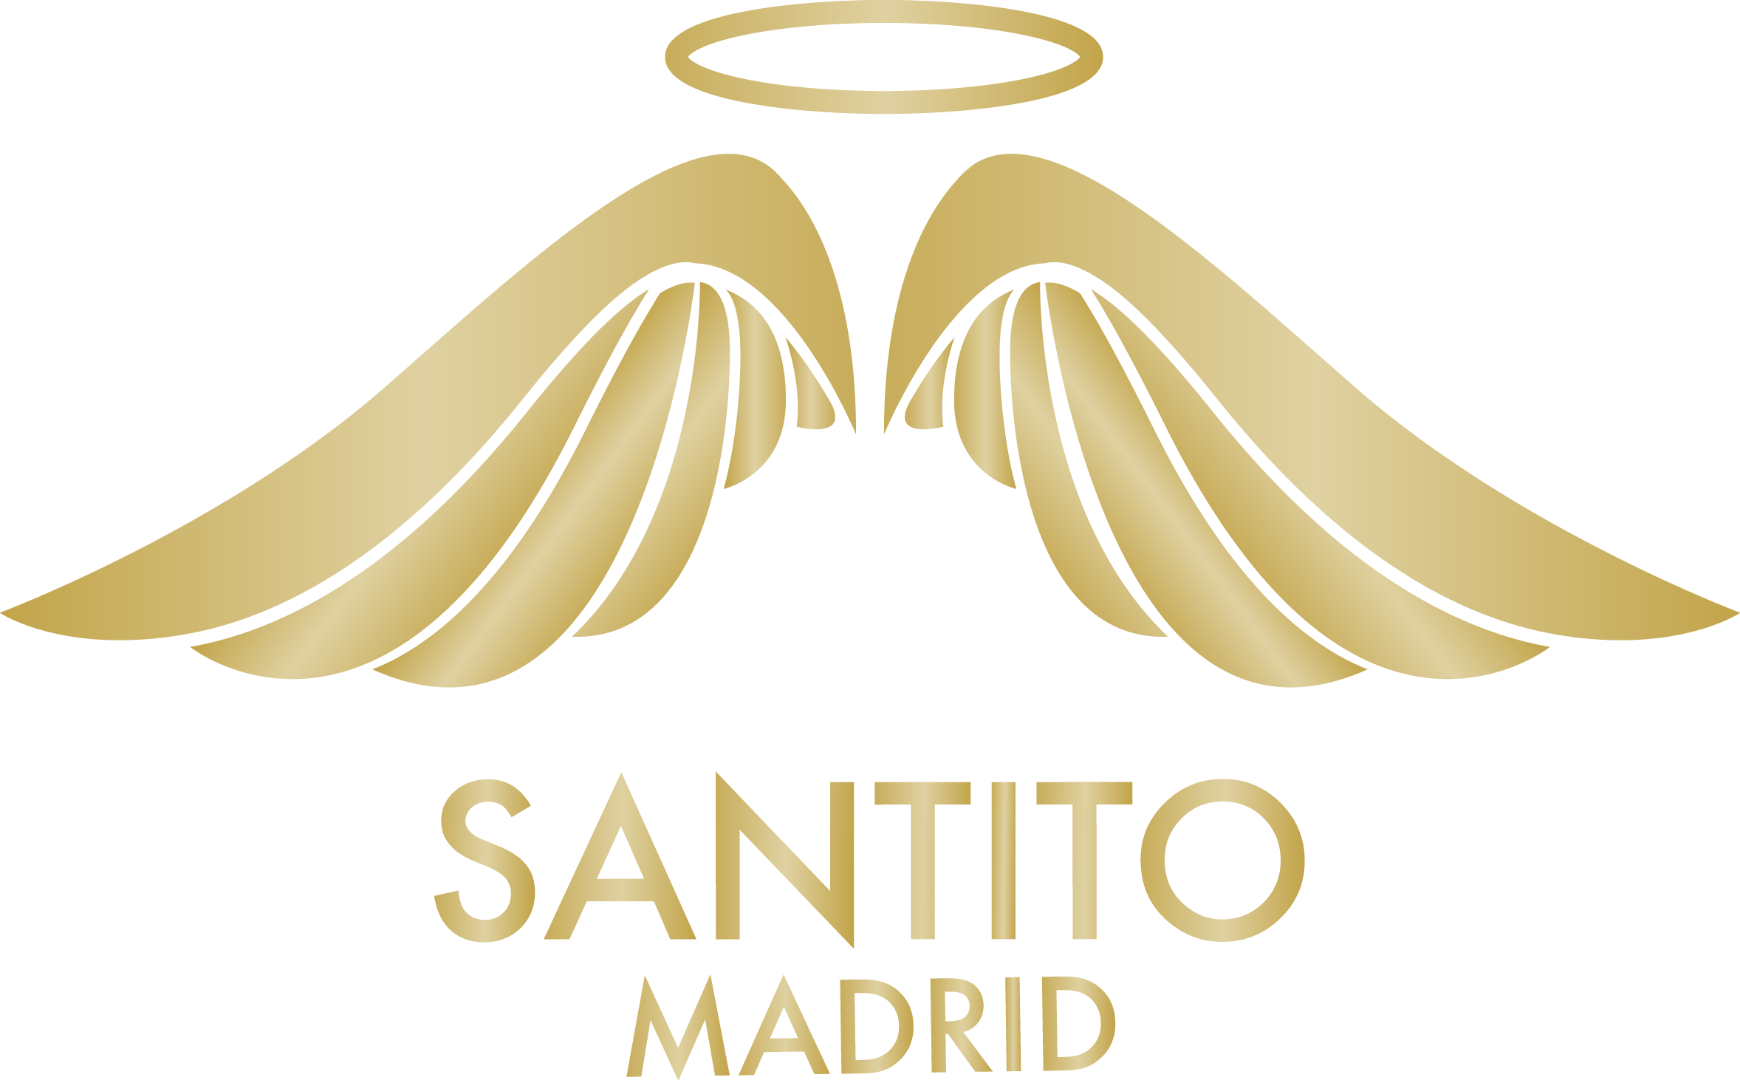 SANTITO MADRID